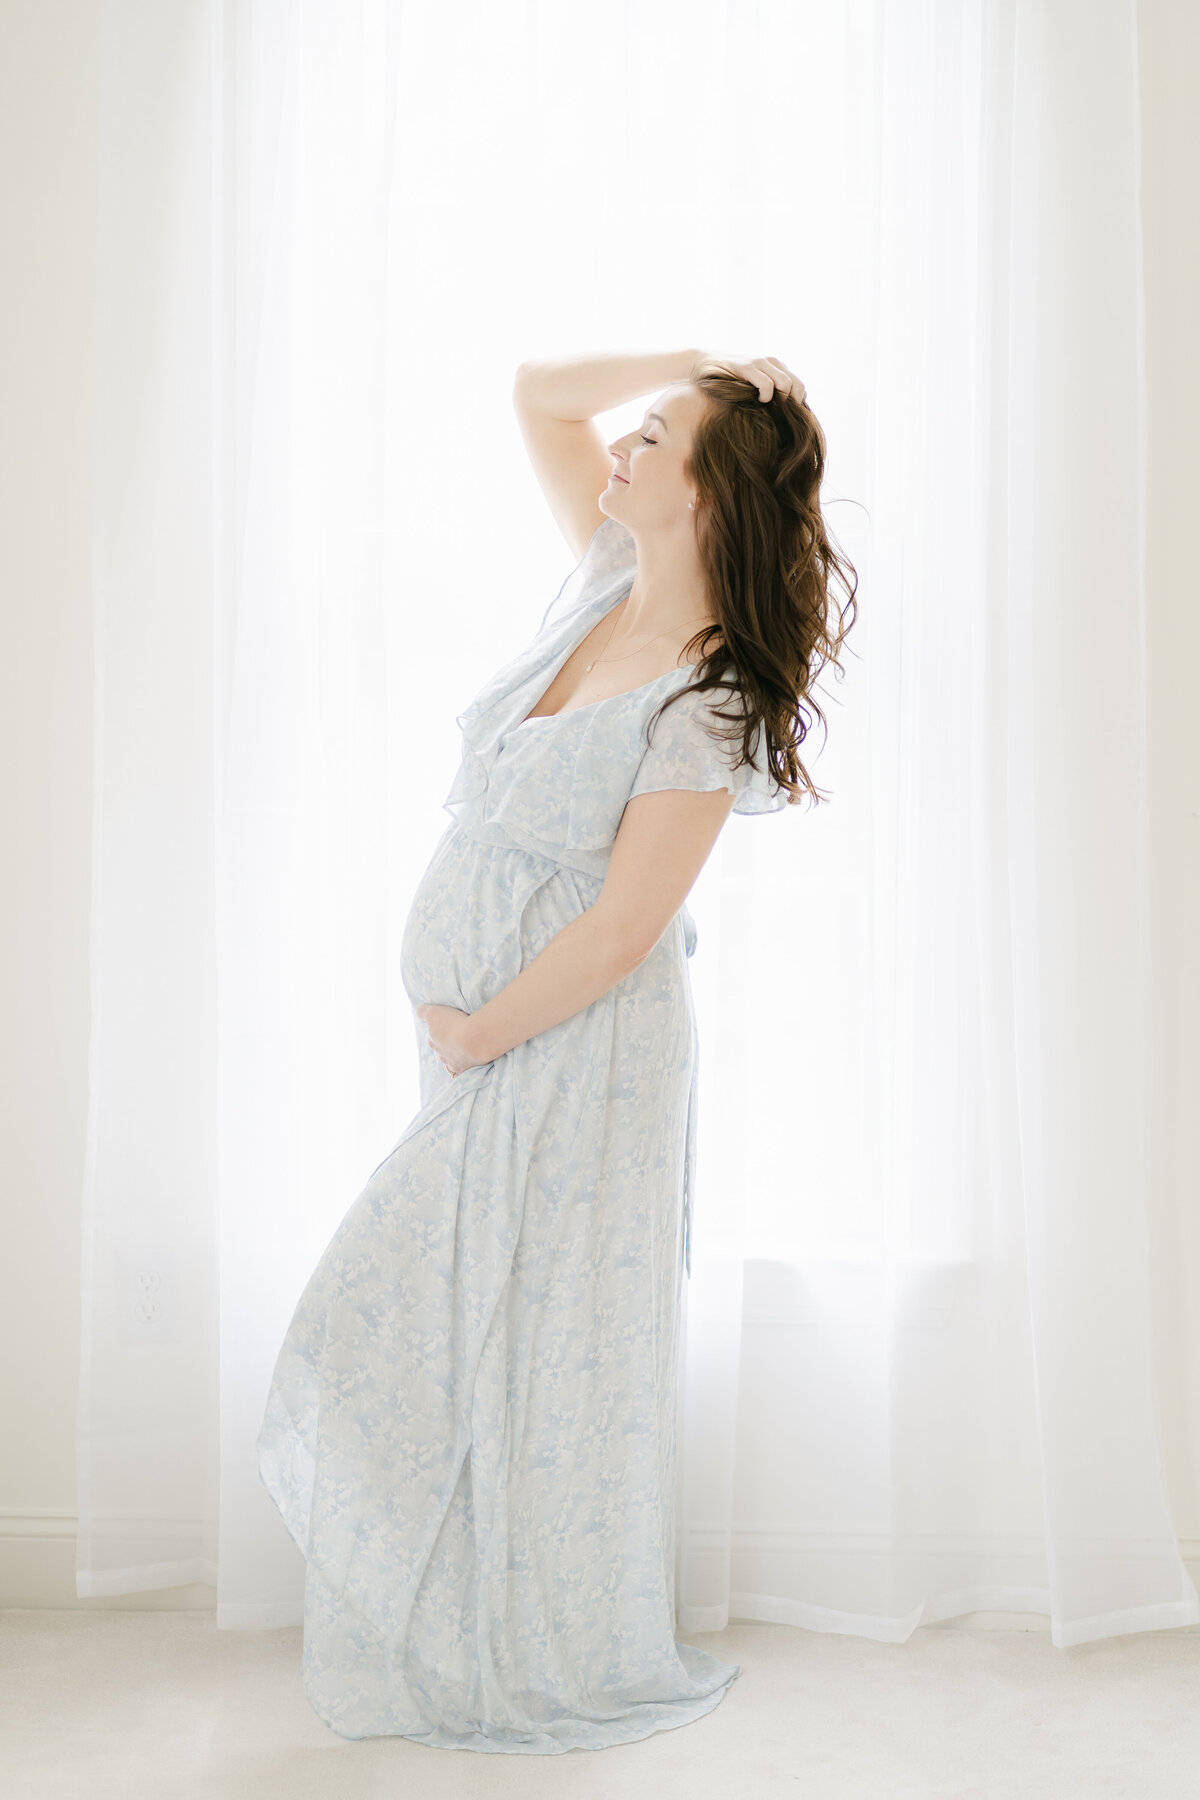 lehigh-valley-maternity-photographer-melissa--26